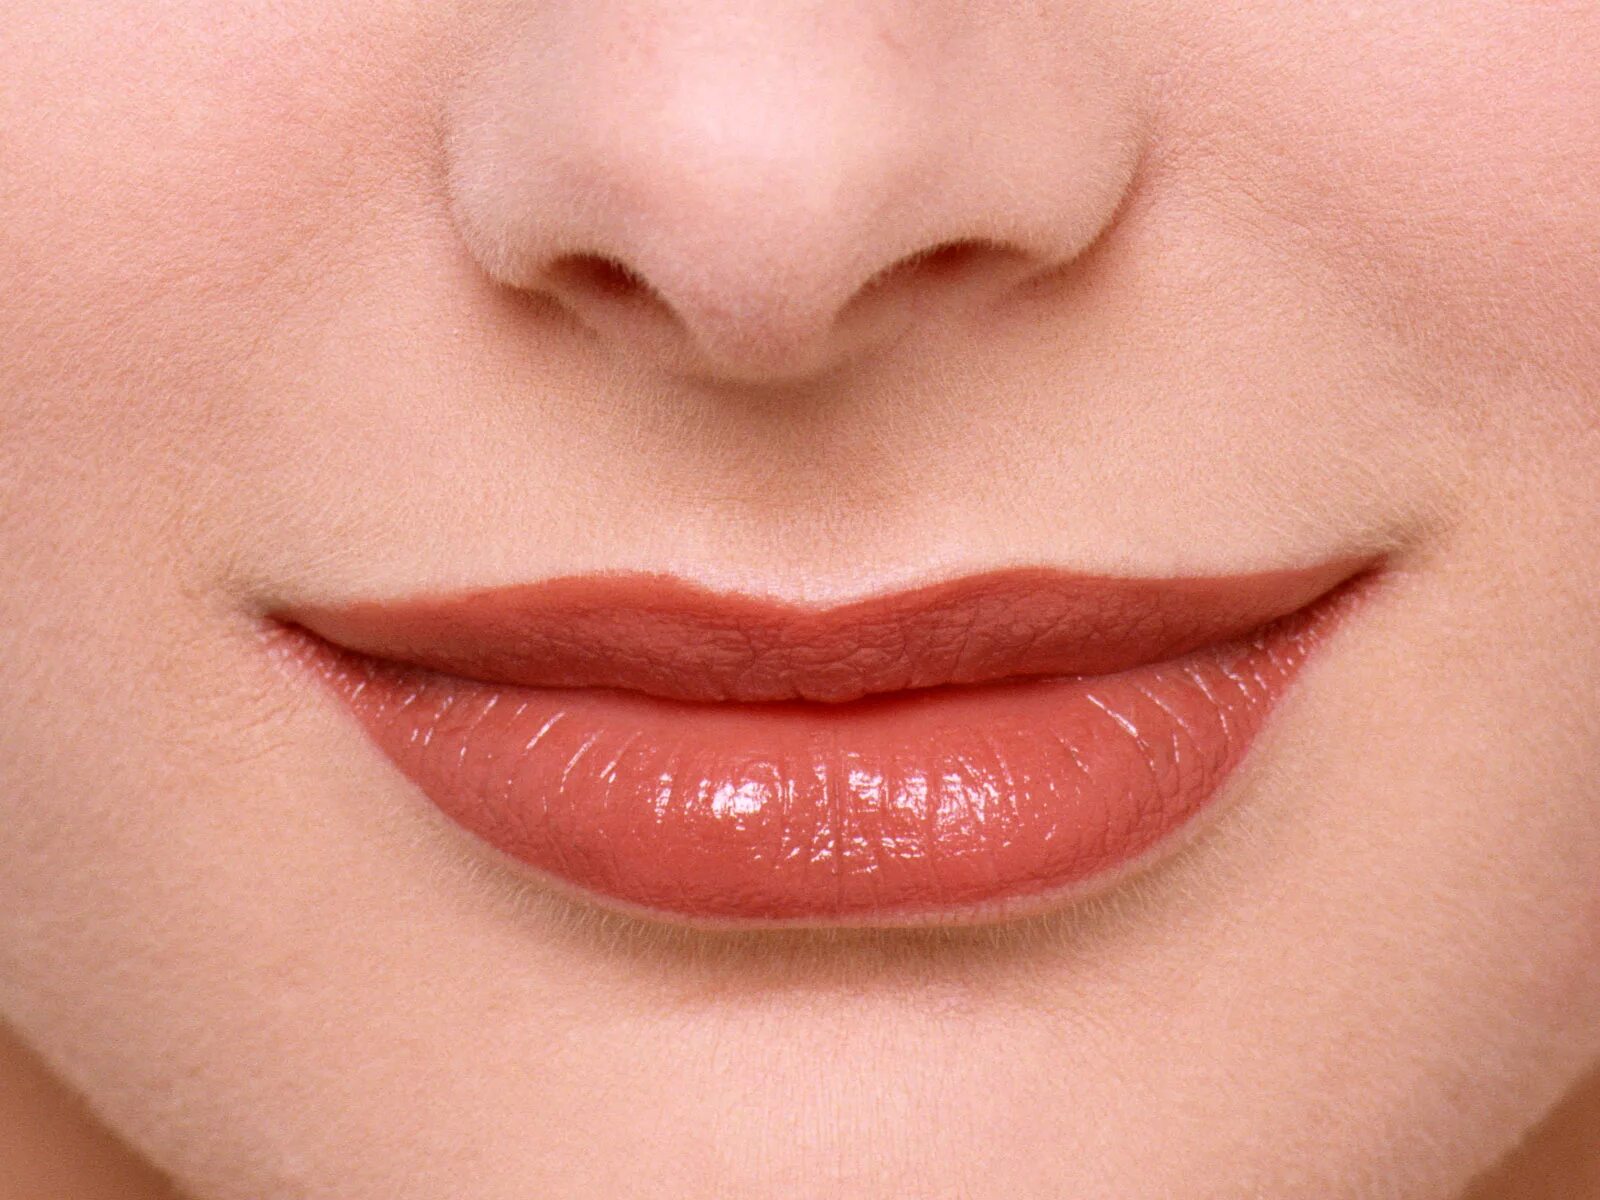 Close lips. Губы улыбка. Женские губы. Улыбающиеся губы. Красивая улыбка губы.